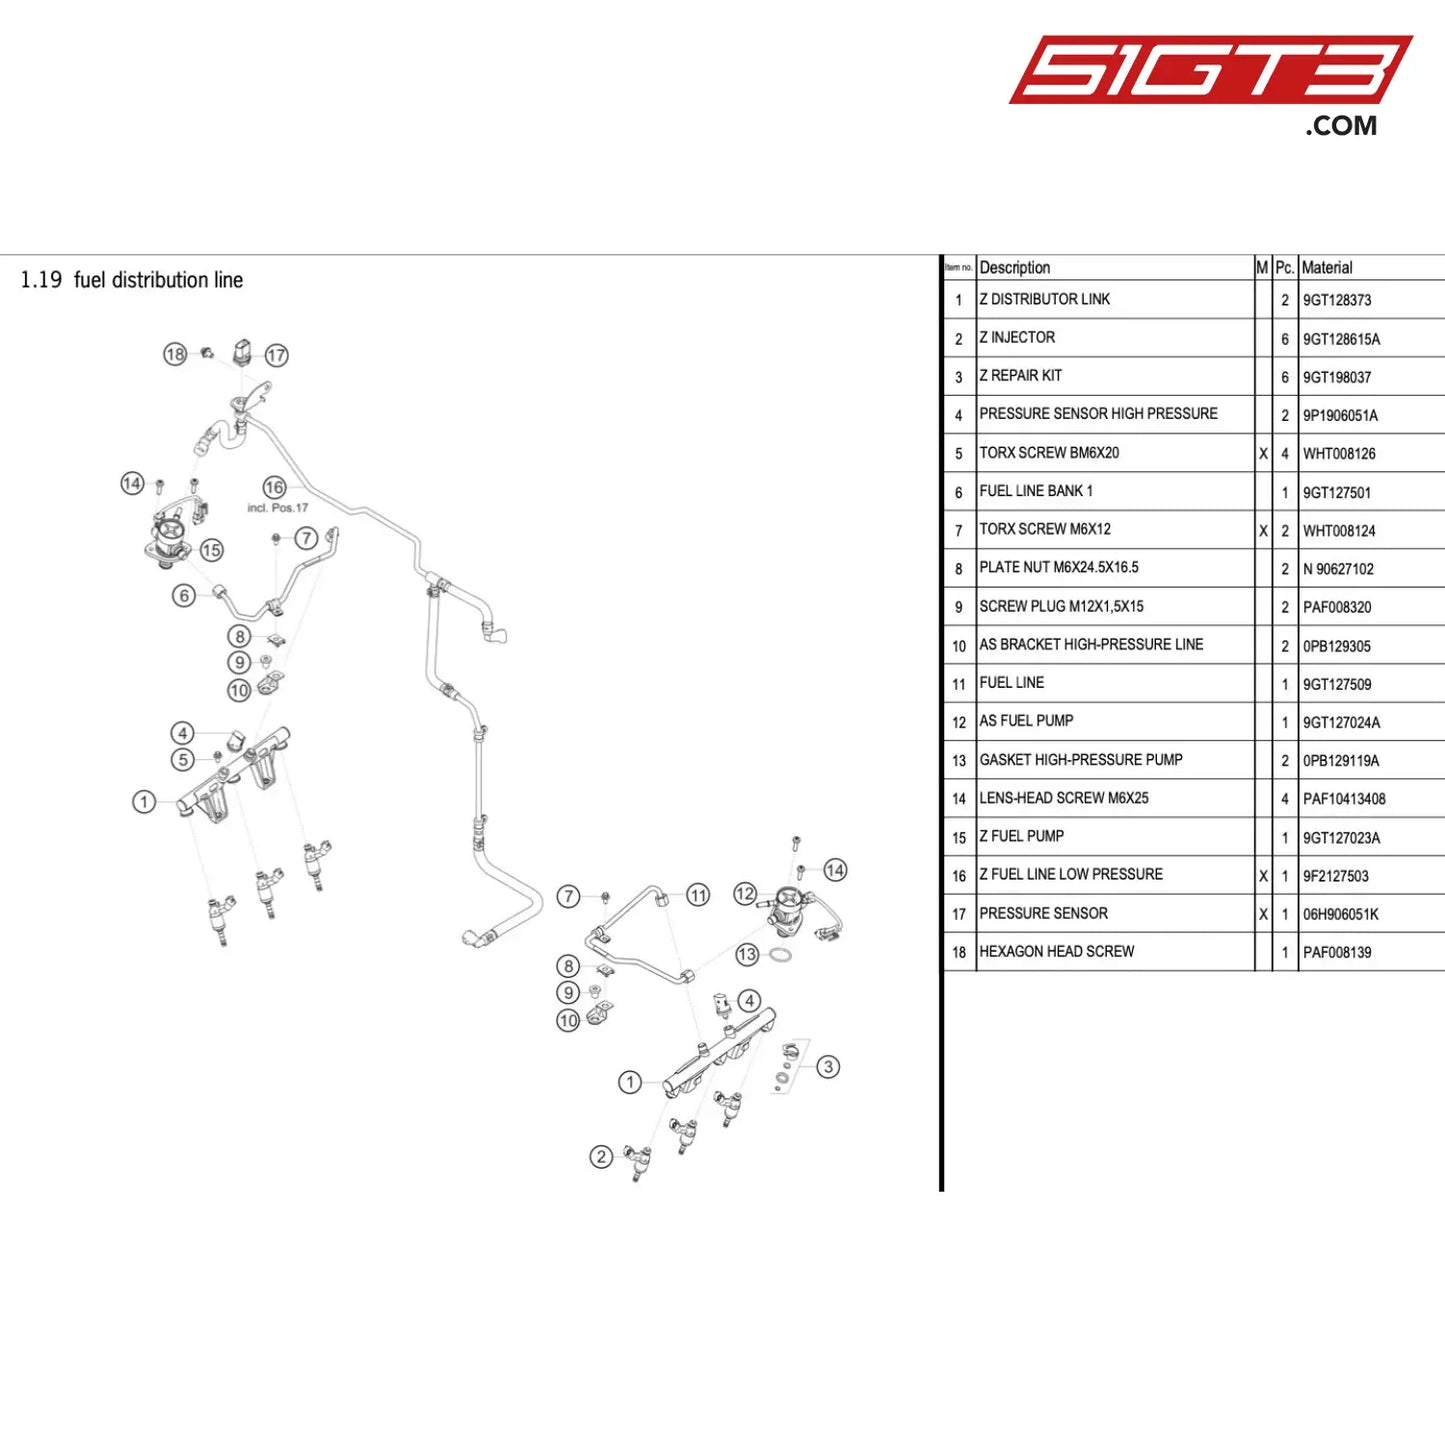 As Fuel Pump - 9Gt127024A [Porsche 718 Cayman Gt4 Rs Clubsport] Fuel Distribution Line